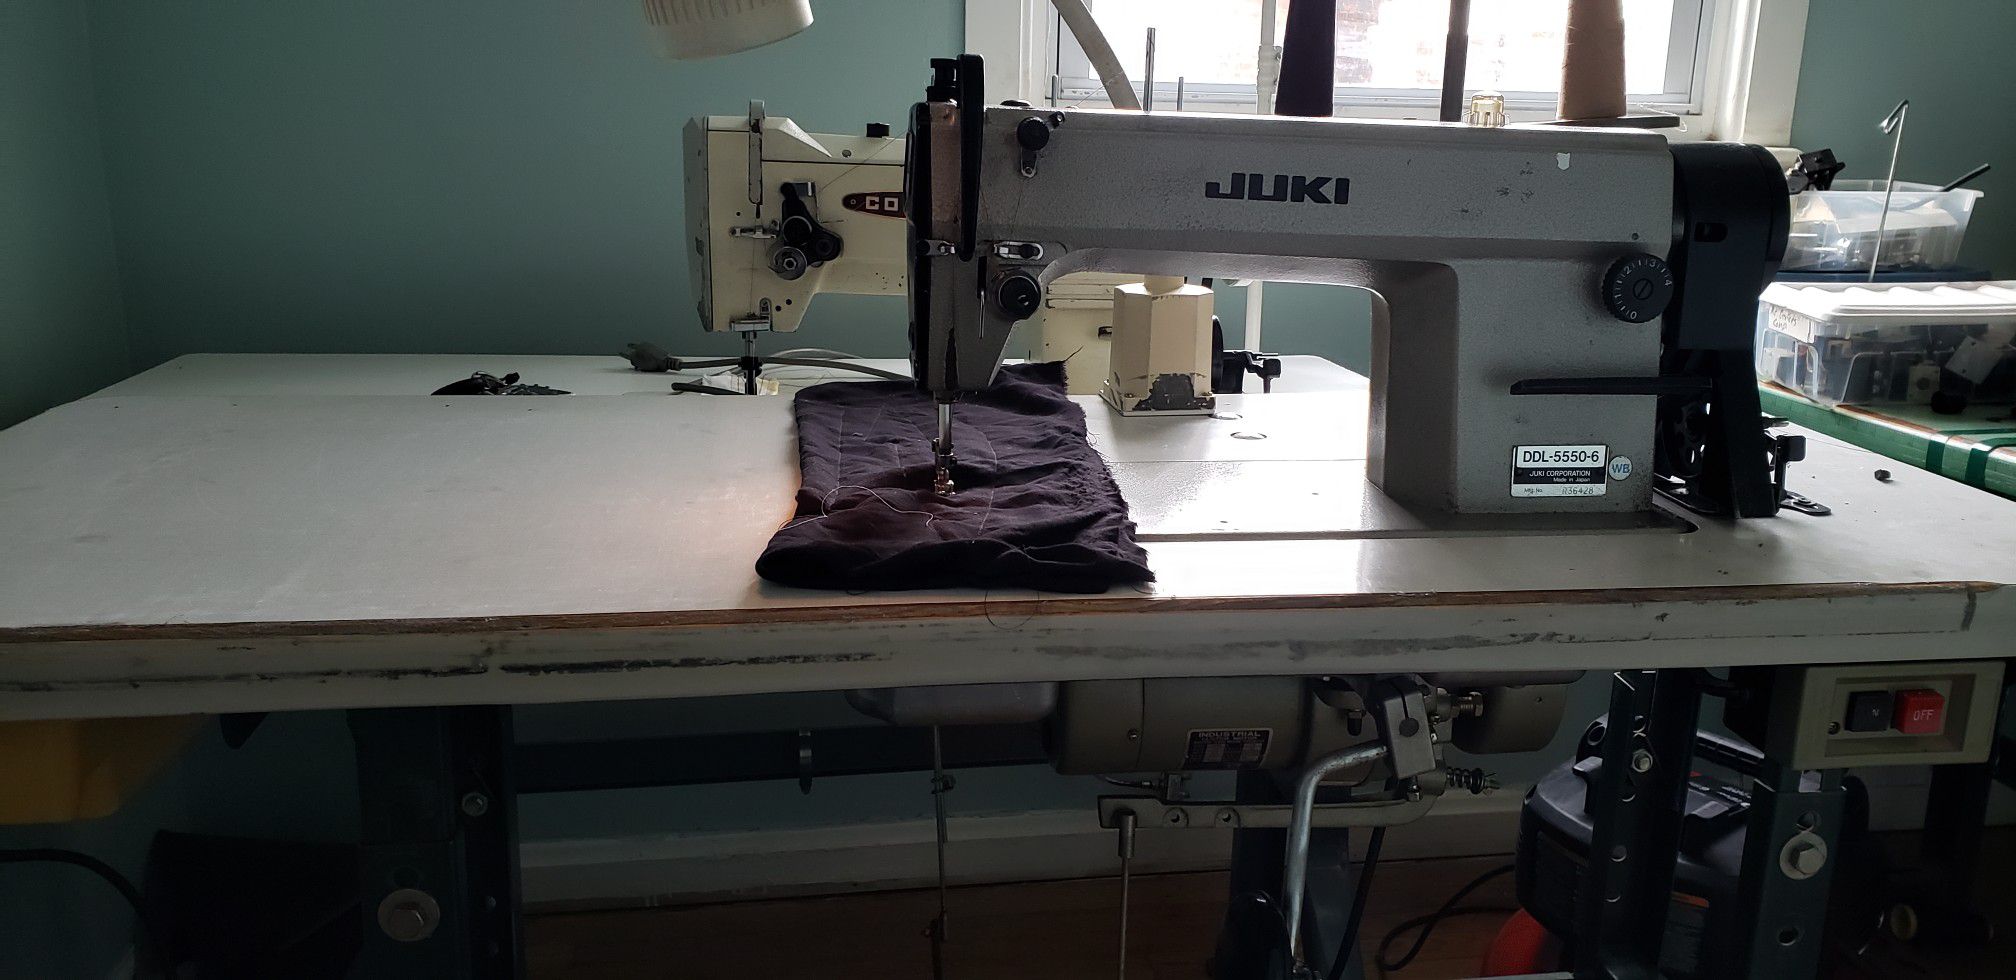 Sewing machine industrial